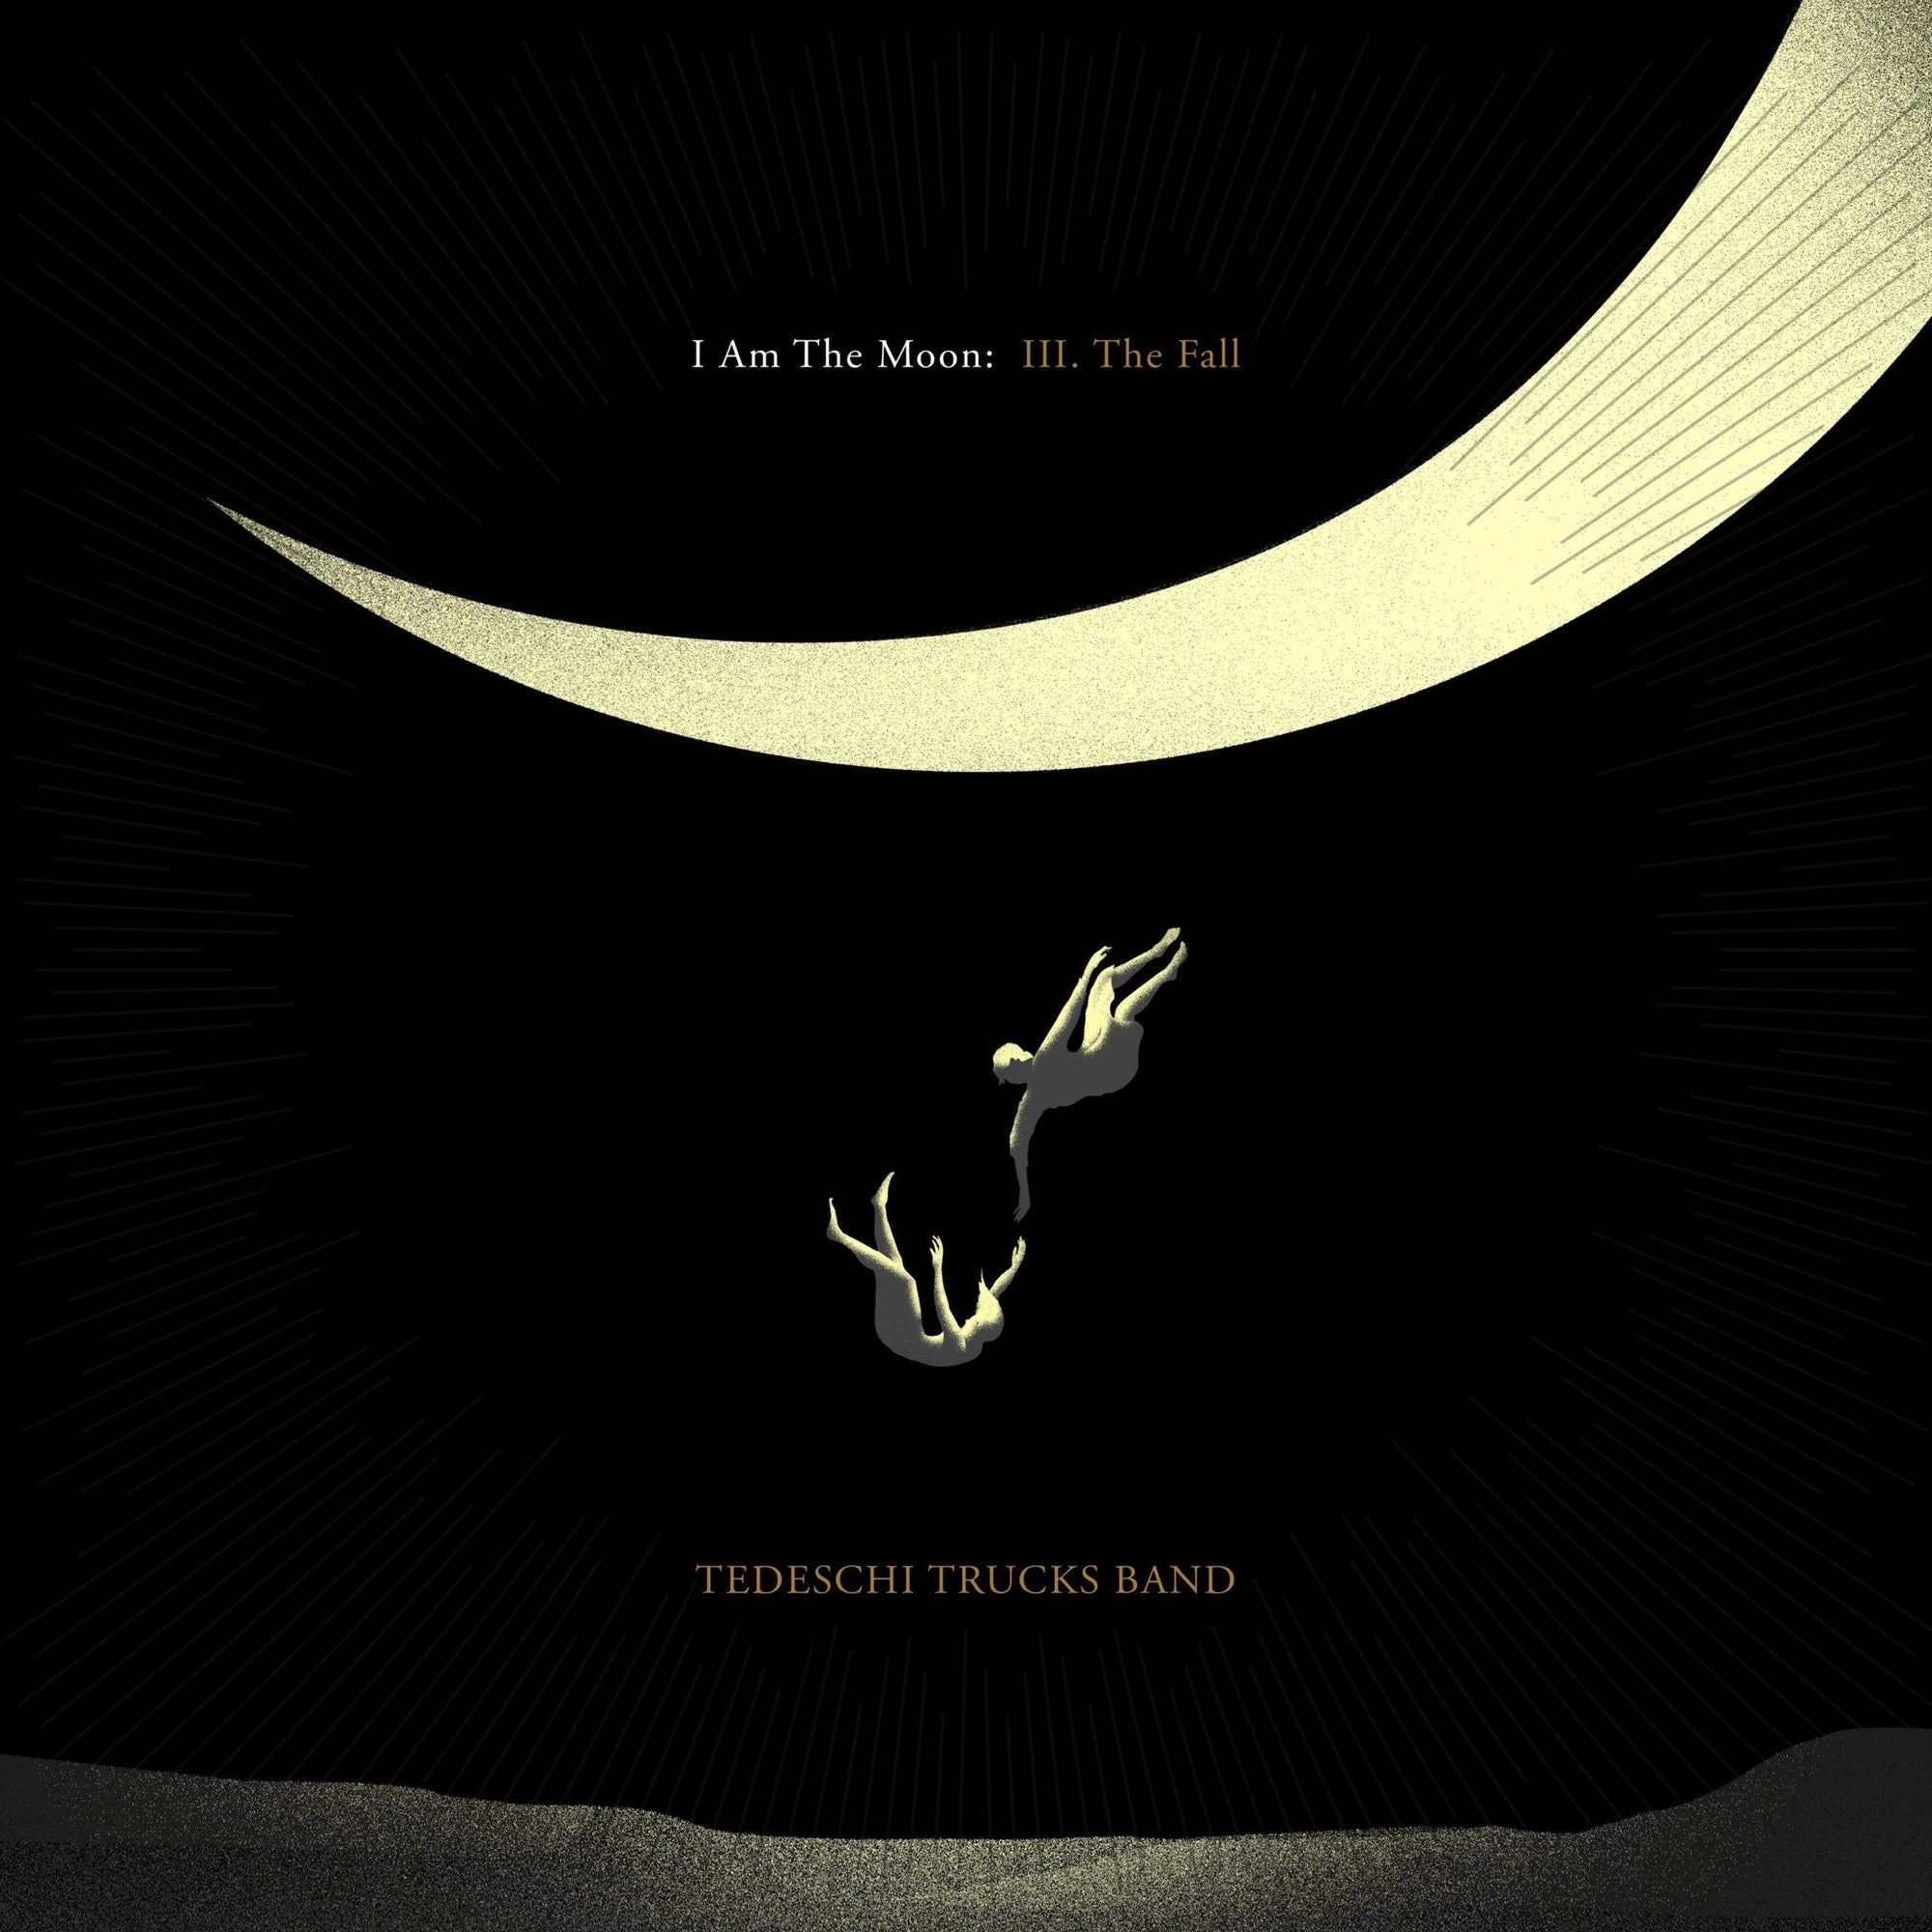 Tedeschi Trucks Band - I Am the Moon: III. The Fall (Vinyl LP)